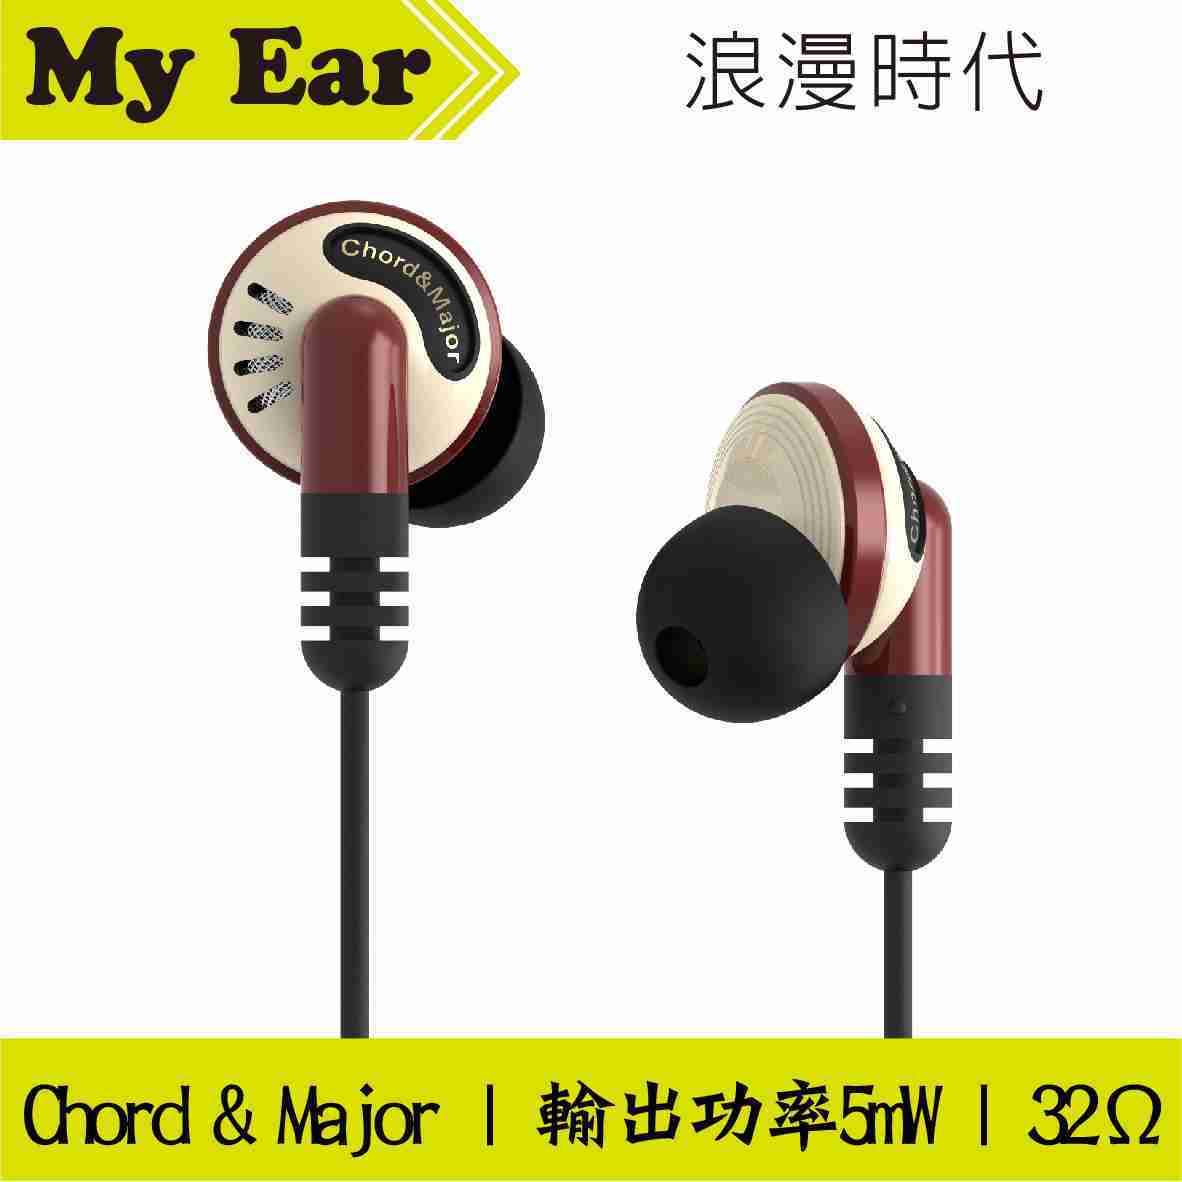 Chord & Major 小調性耳機 浪漫時代 minor series 耳道式 耳機 | My Ear 耳機專門店